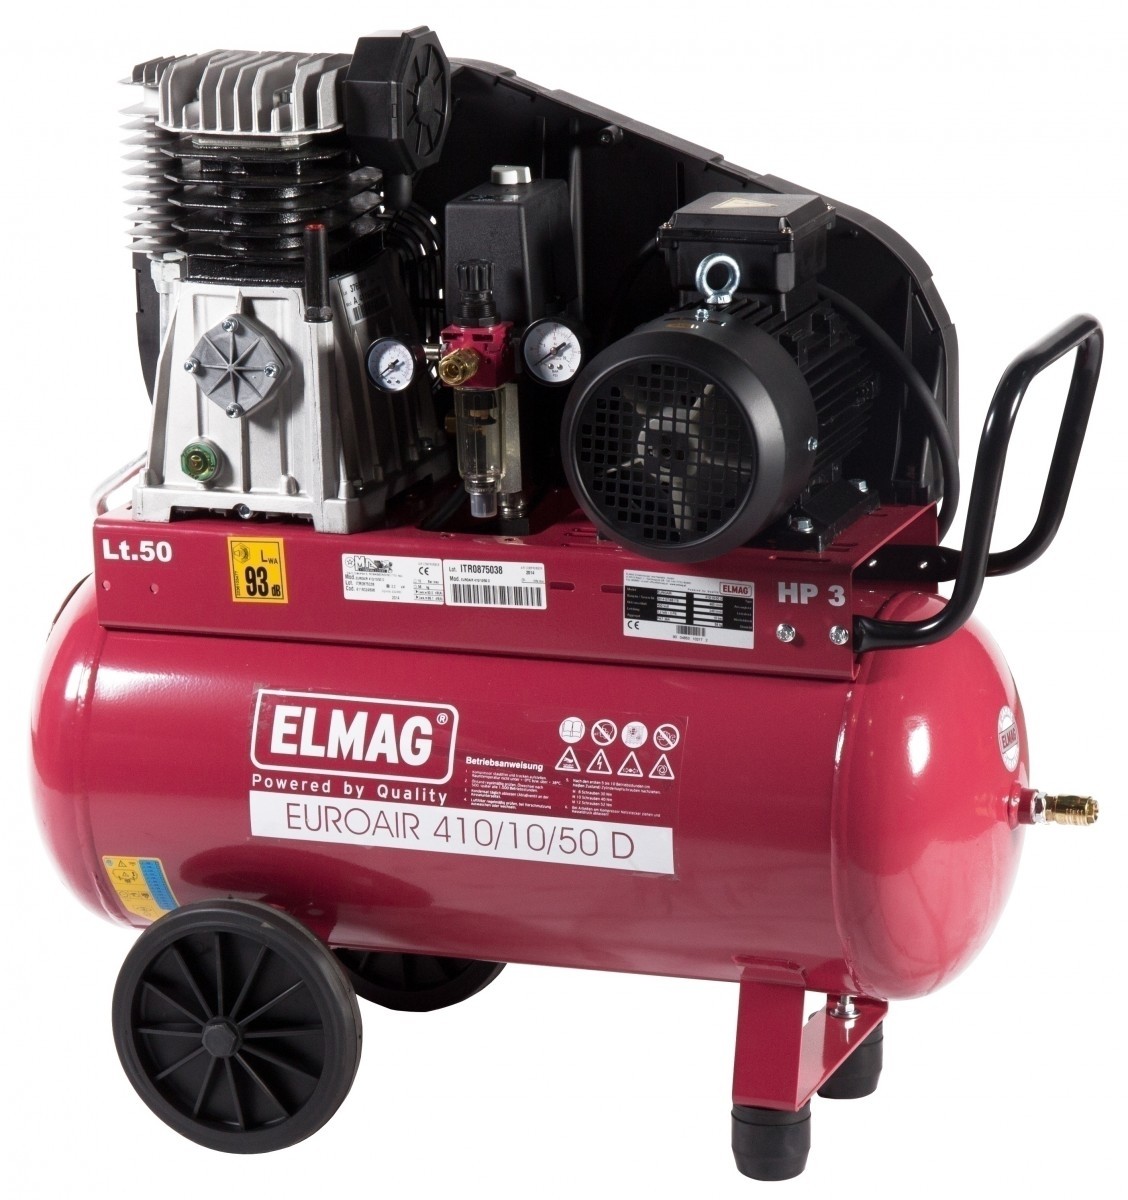 ELMAG EUROAIR 410/10/50D Kompressor